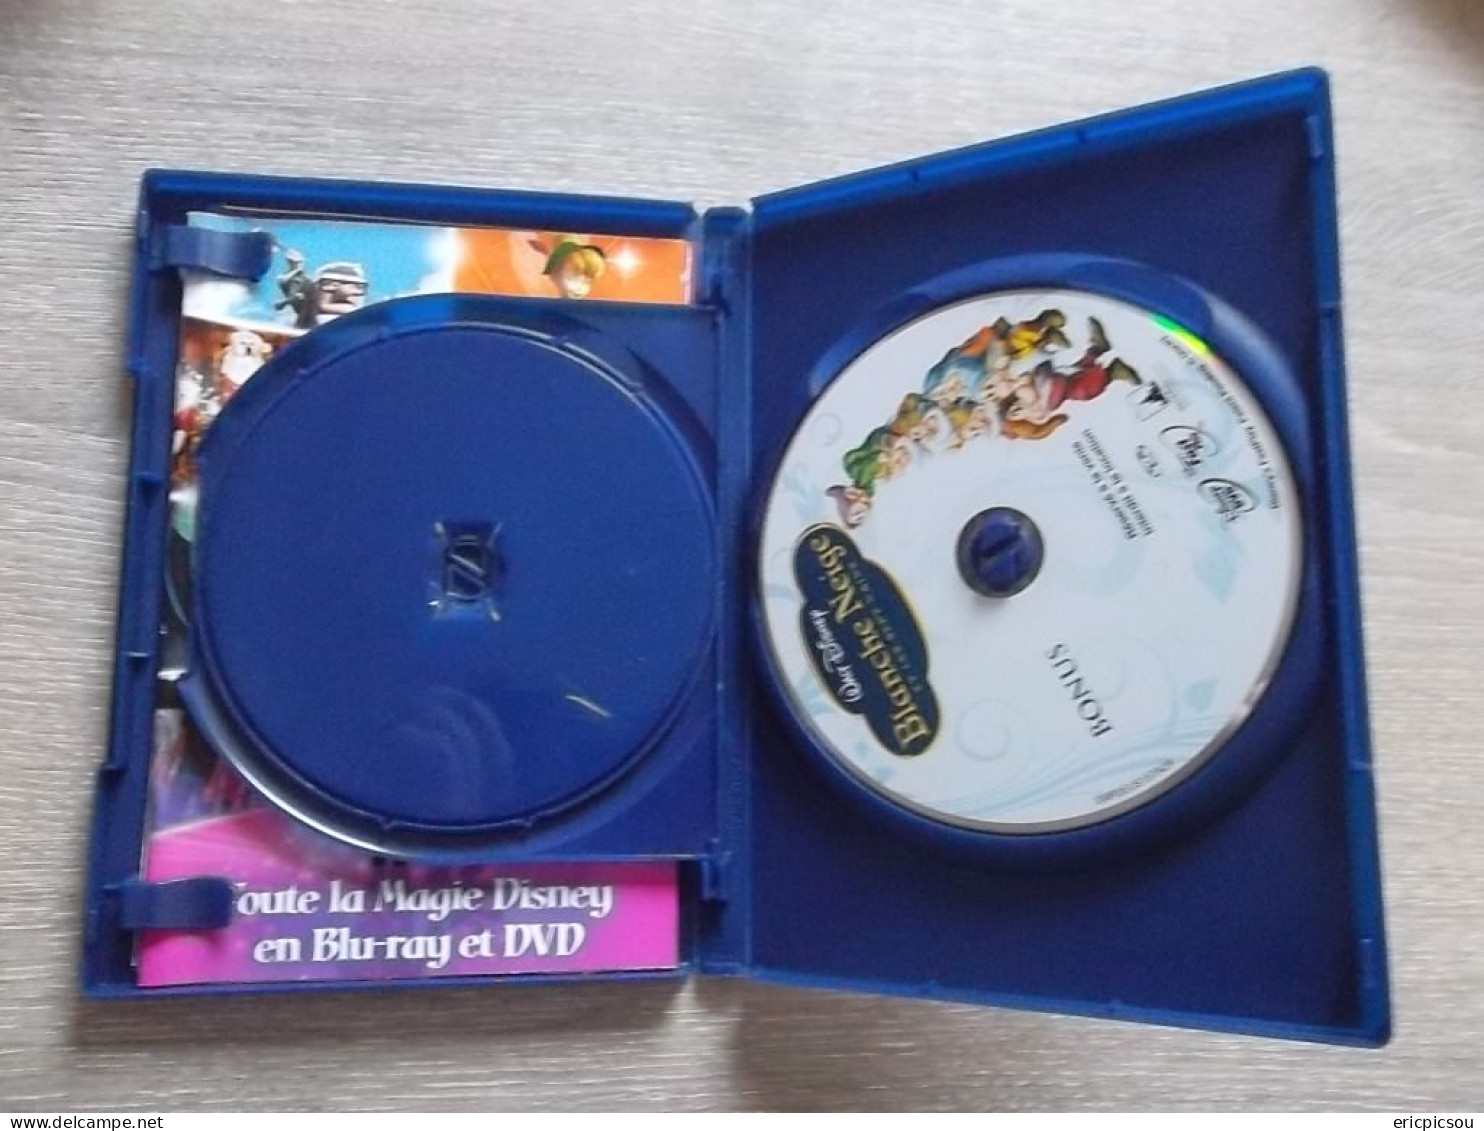 BLANCHE-NEIGE ( Disney) 2 DVD ( Edition Collector ) - Dessin Animé